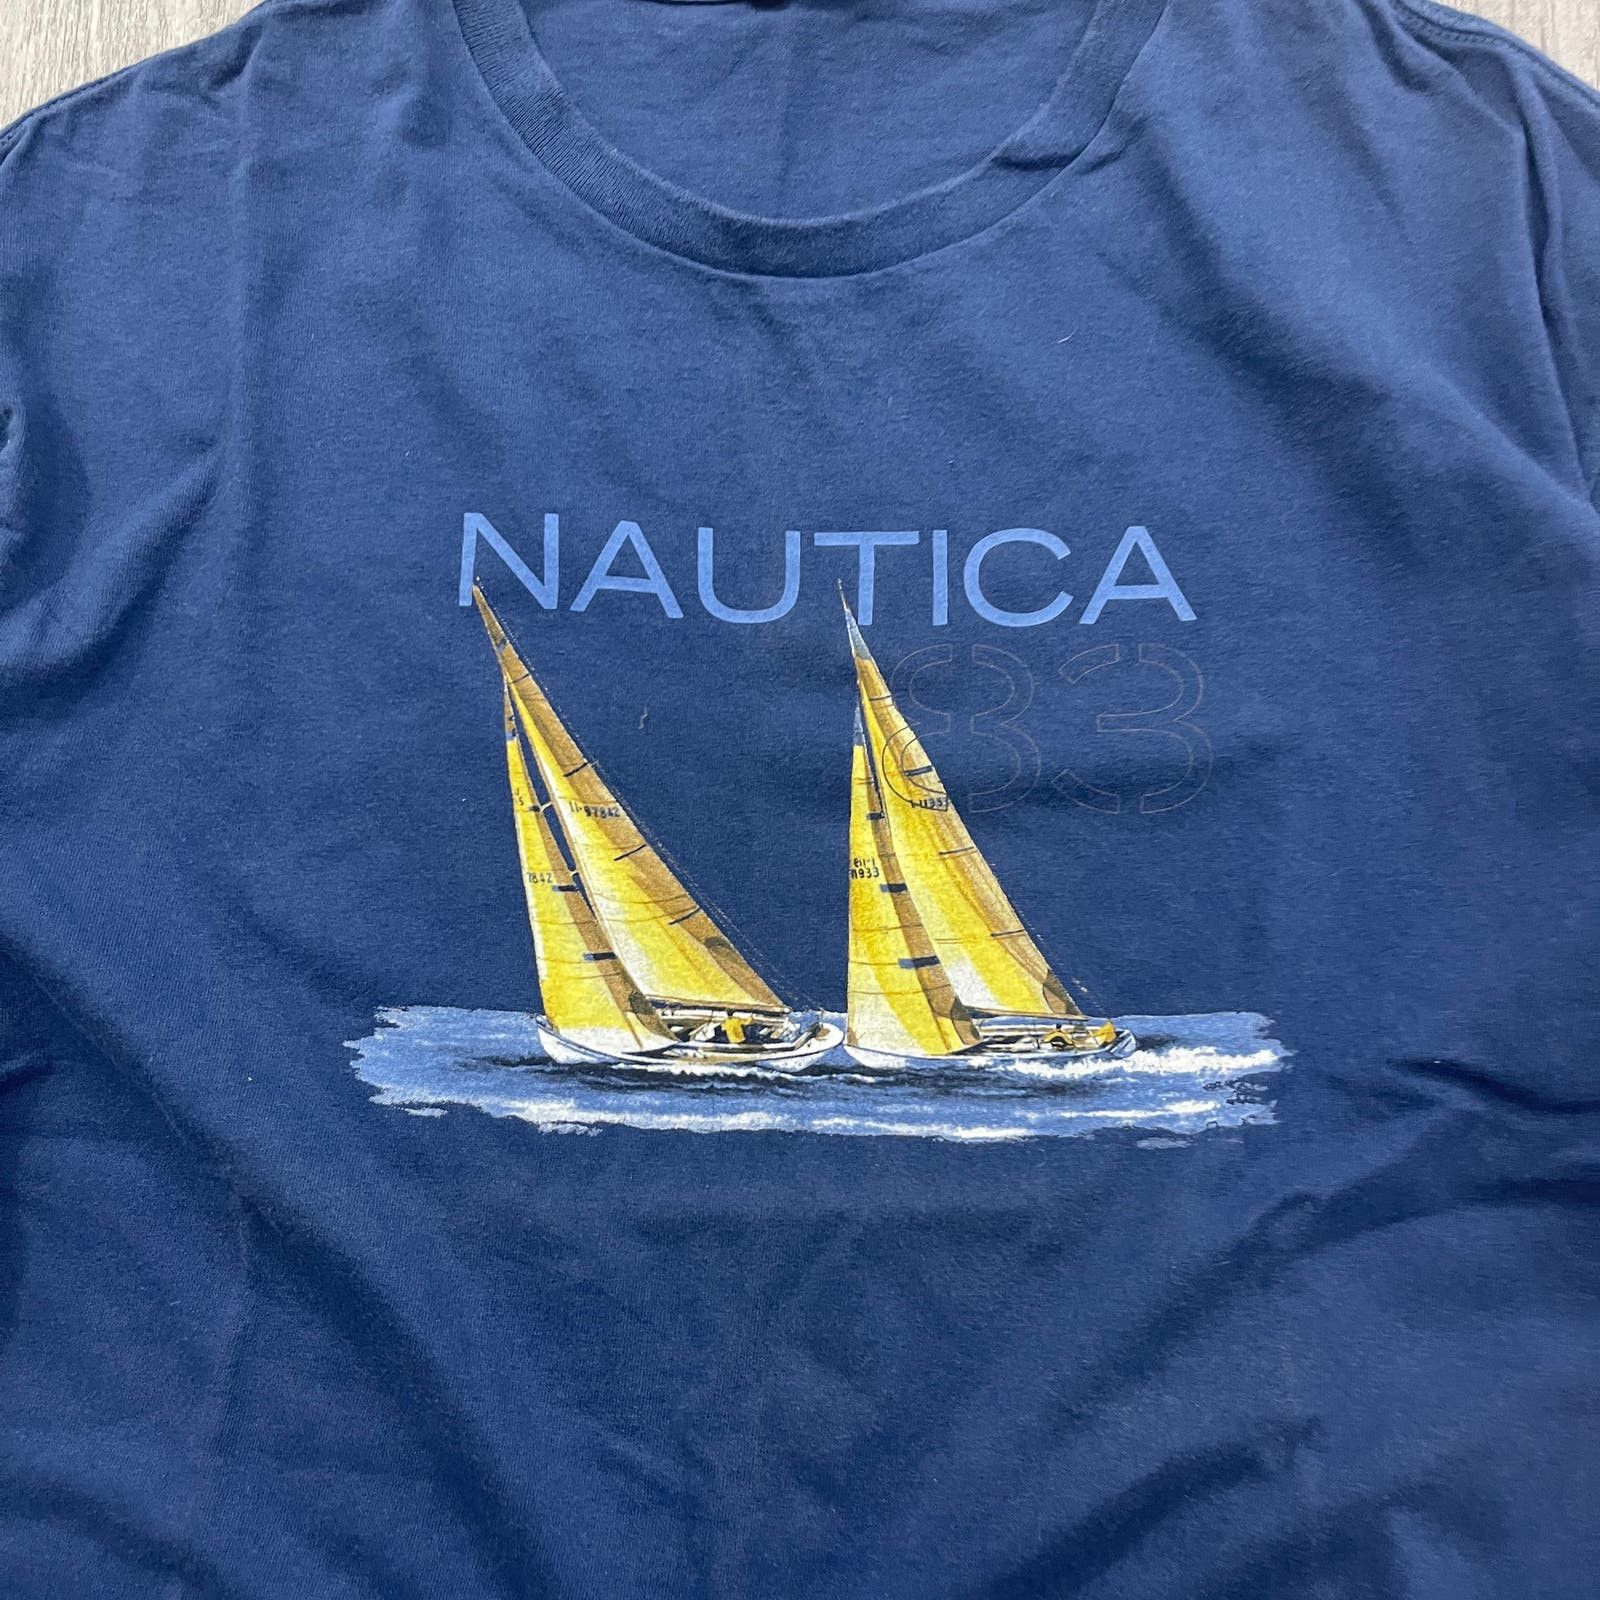 Nautica VINTAGE 90s Nautica Competition Sailing Boat Shirt Large Size US XL / EU 56 / 4 - 3 Thumbnail